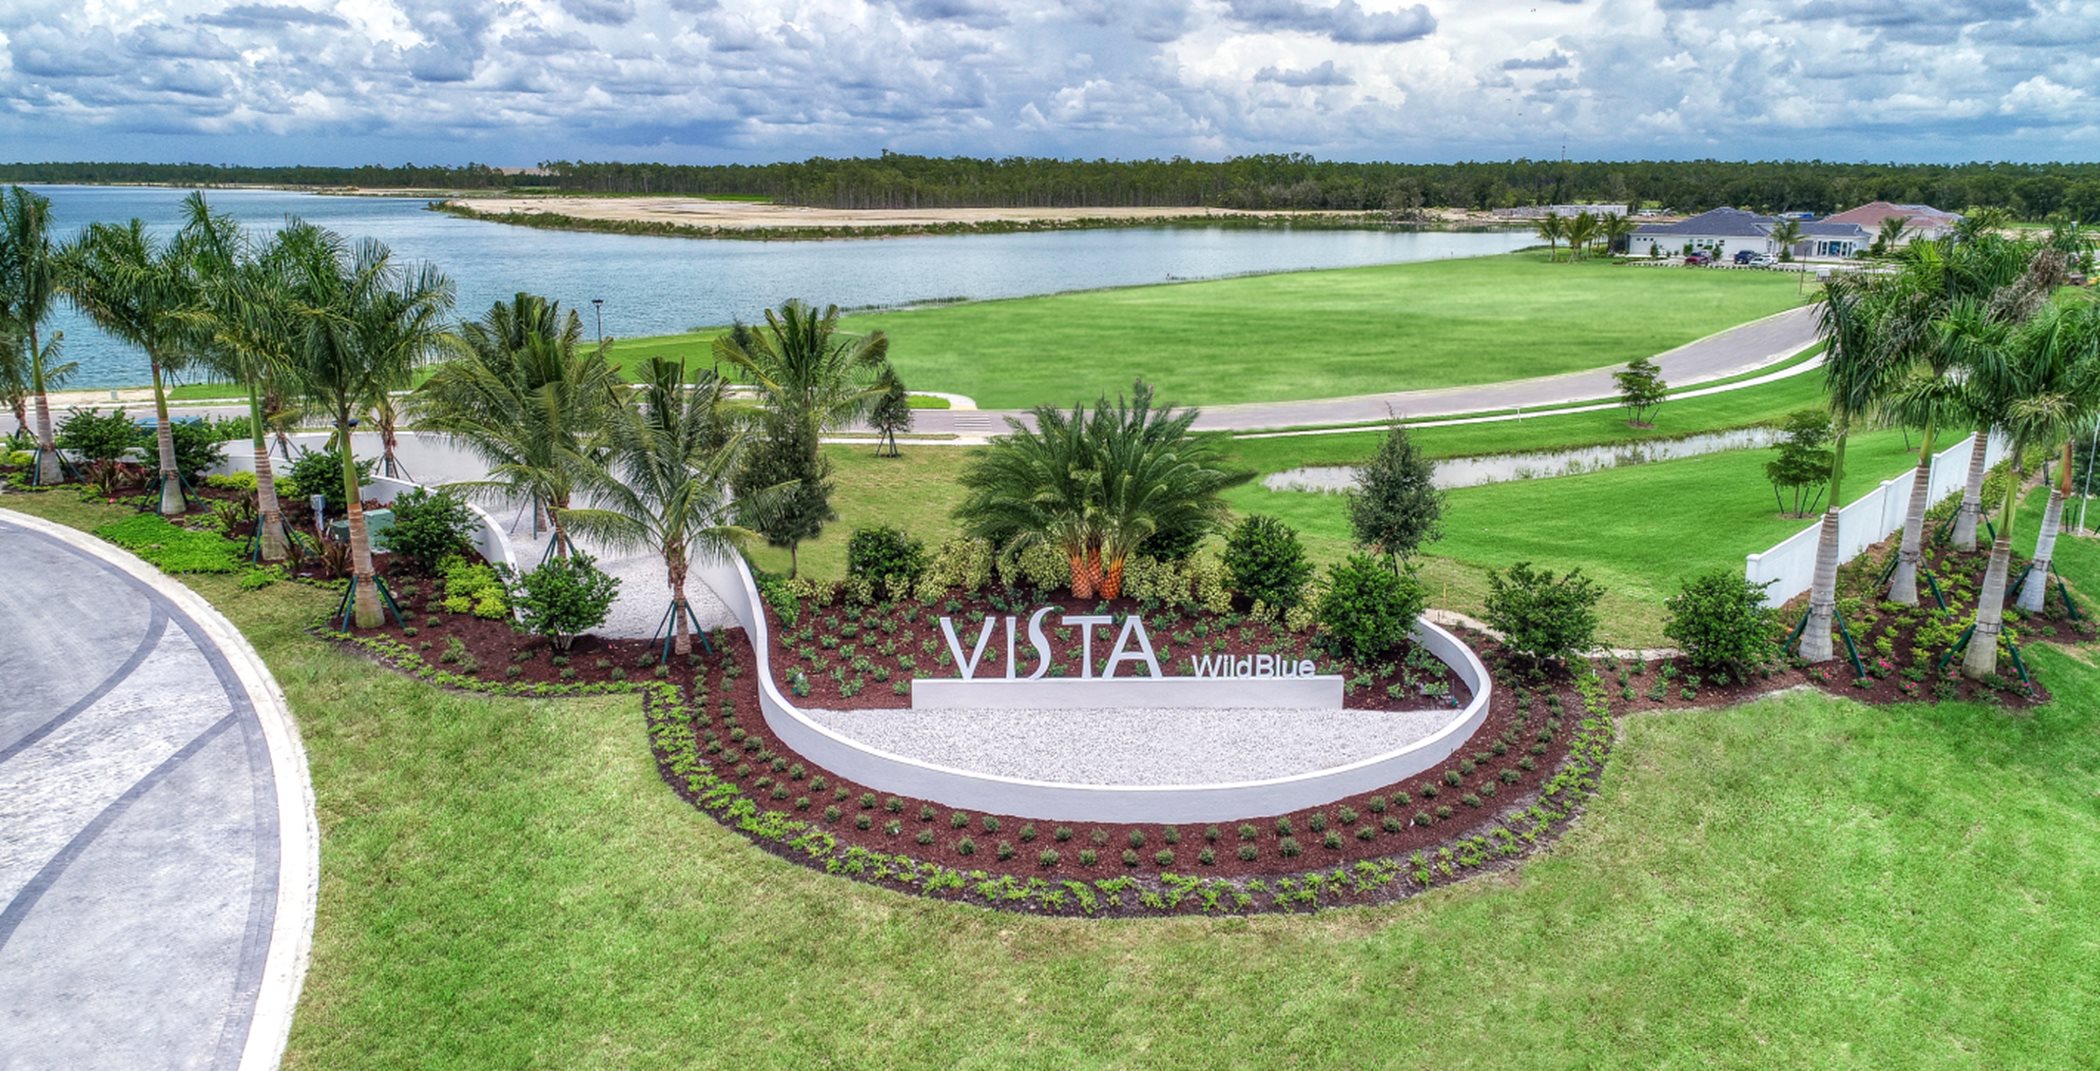 Vista Wildblue entry monument